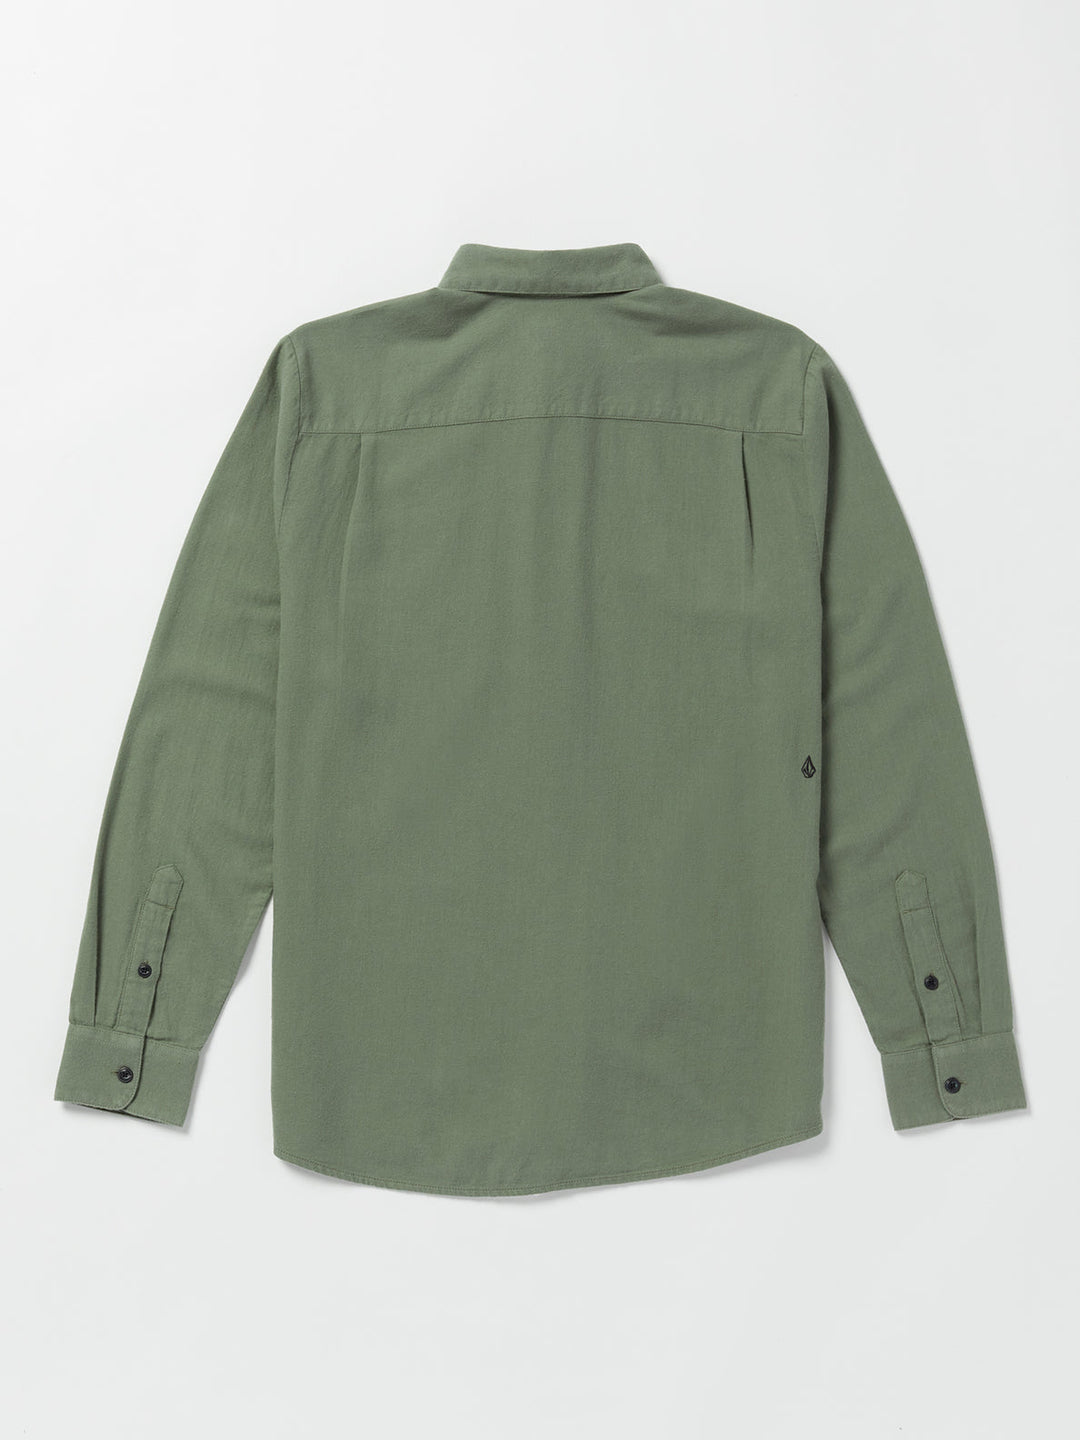 Volcom Caden Solid Long Sleeve Shirt - Agave - Sun Diego Boardshop